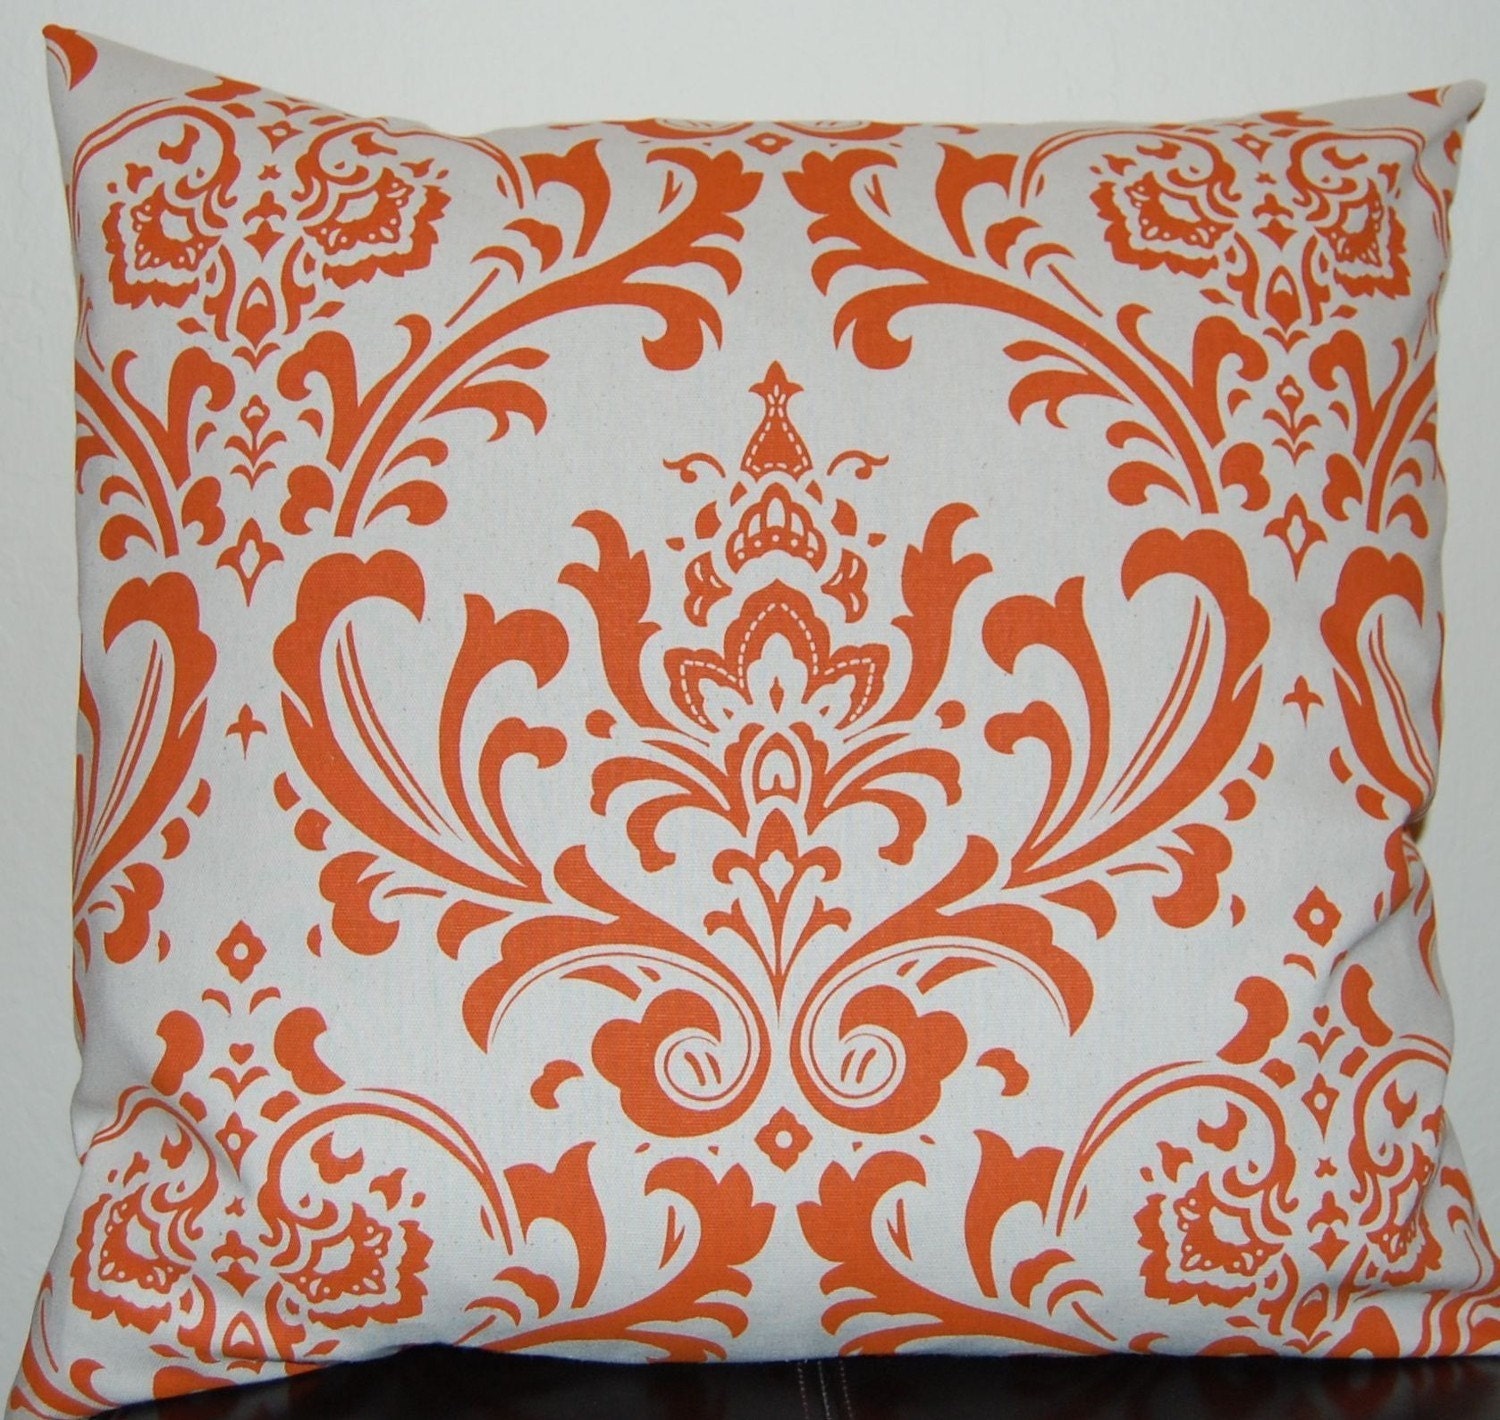 Orange Damask Decorative Pillow Covers 20 x 20 Inches Sweet Potato Orange on Natural